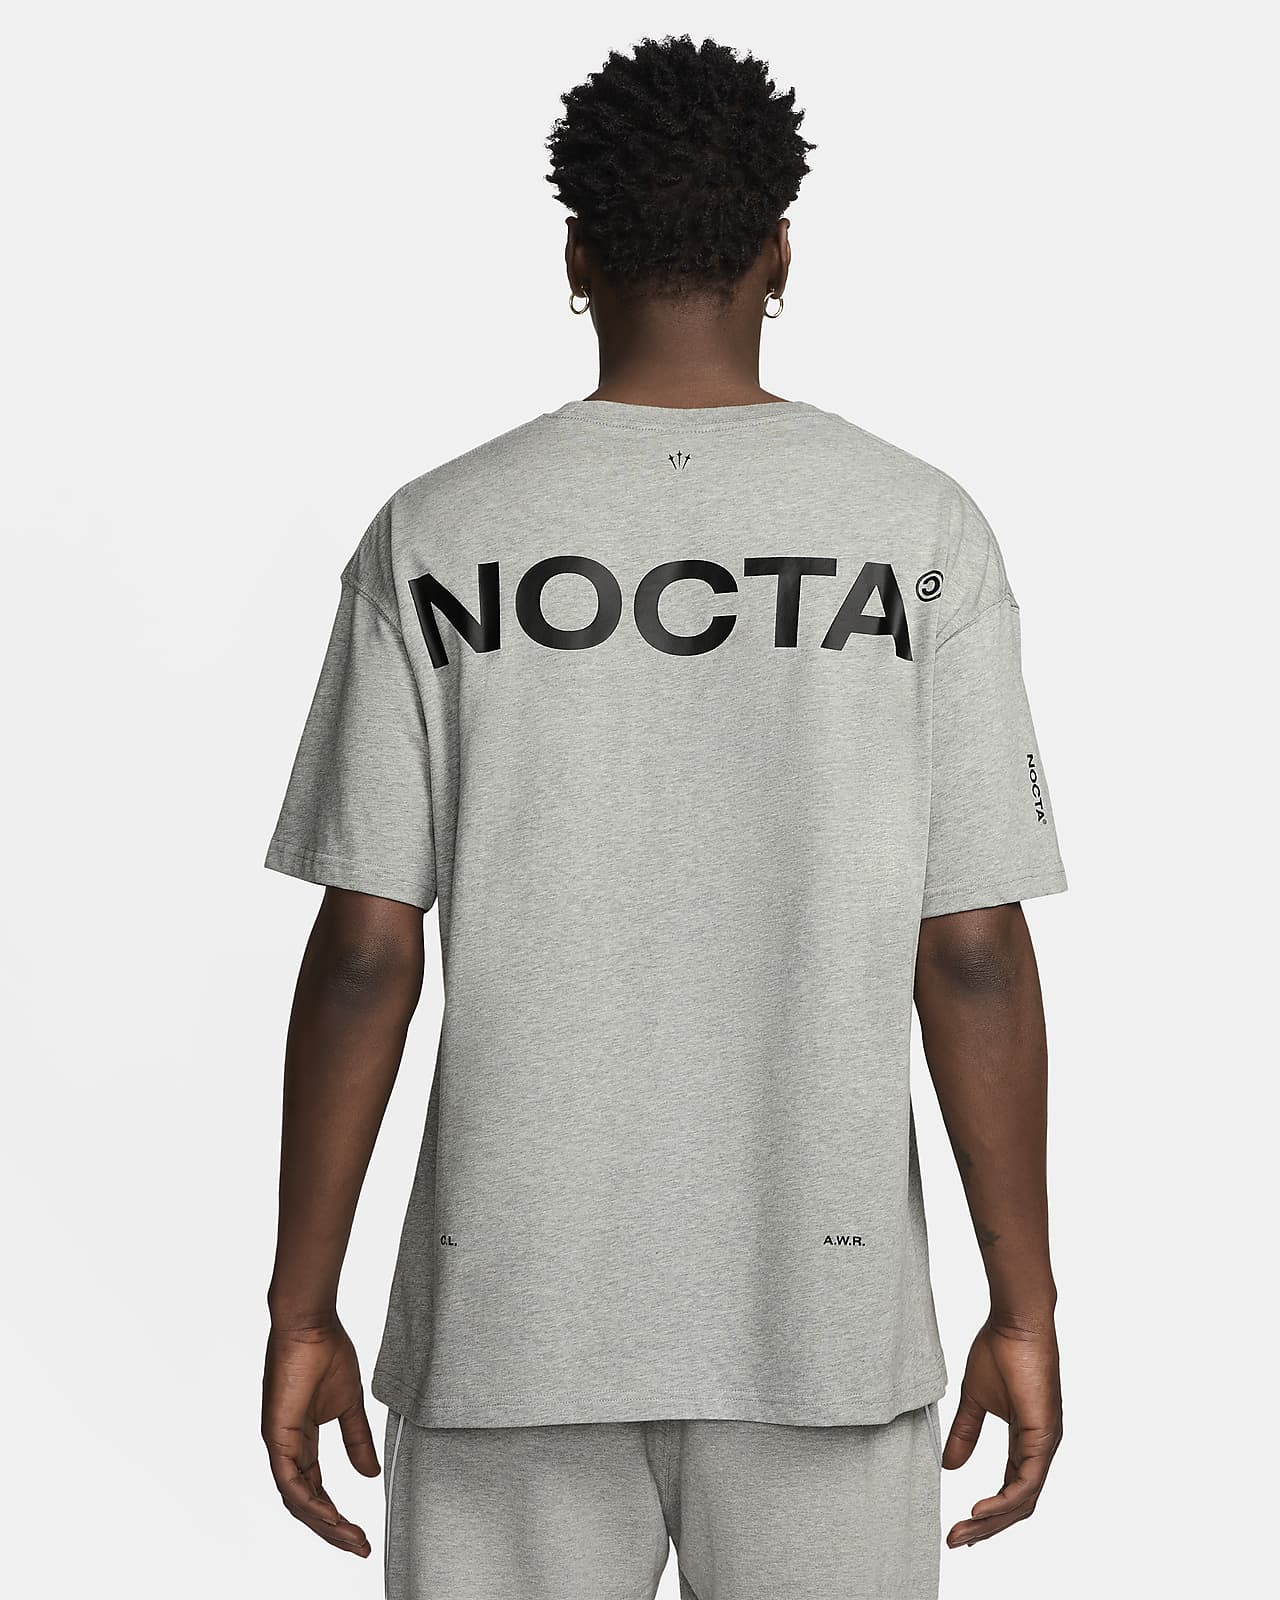 NOCTA Graphic Tee